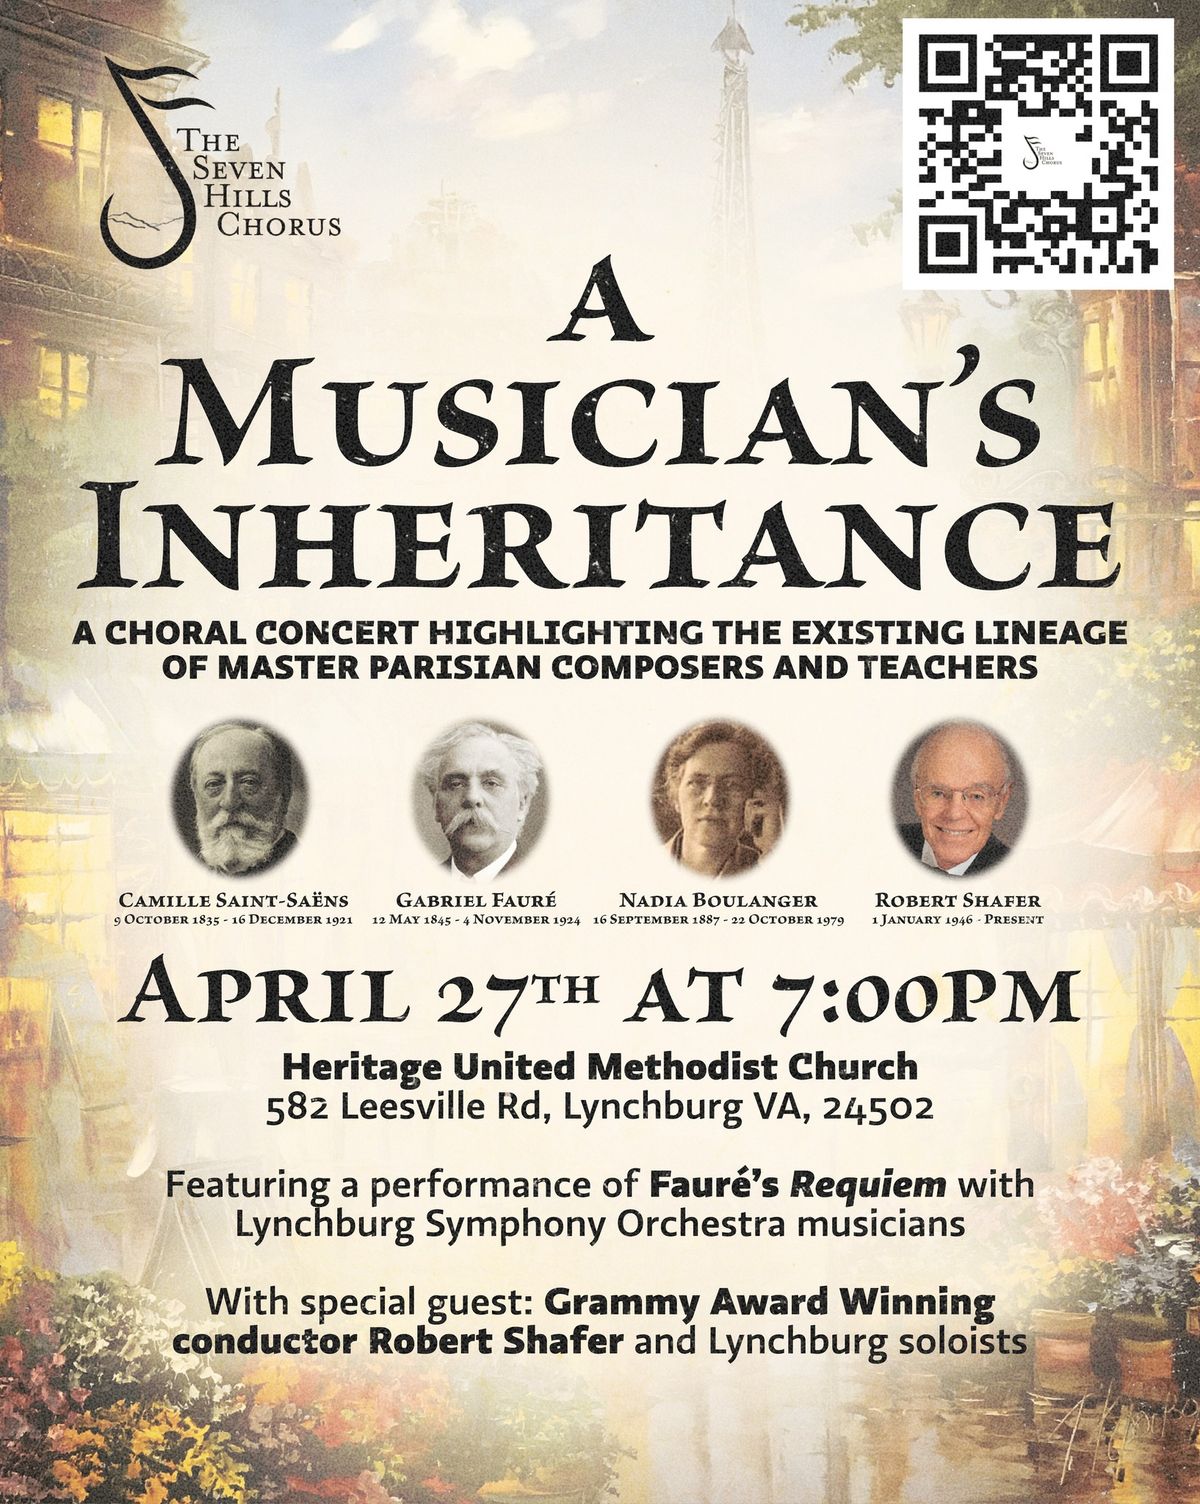 A Musician's Inheritance - A Choral Concert